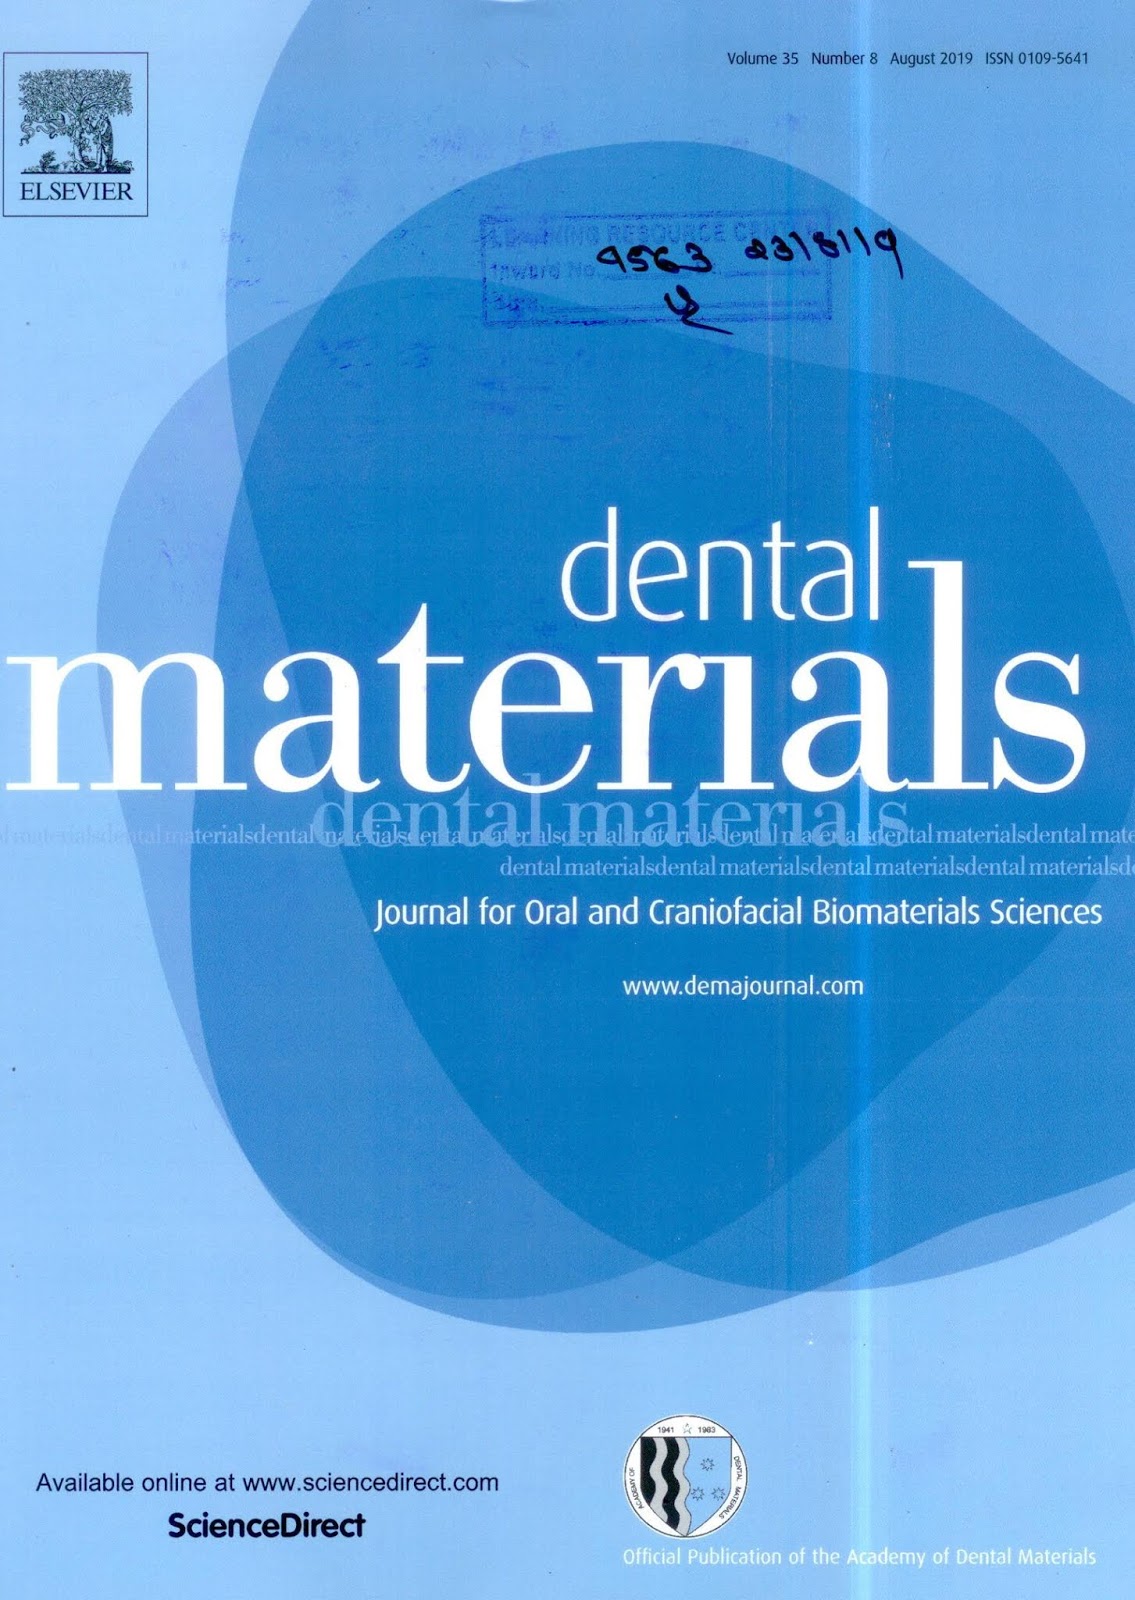 https://www.sciencedirect.com/journal/dental-materials/vol/35/issue/8